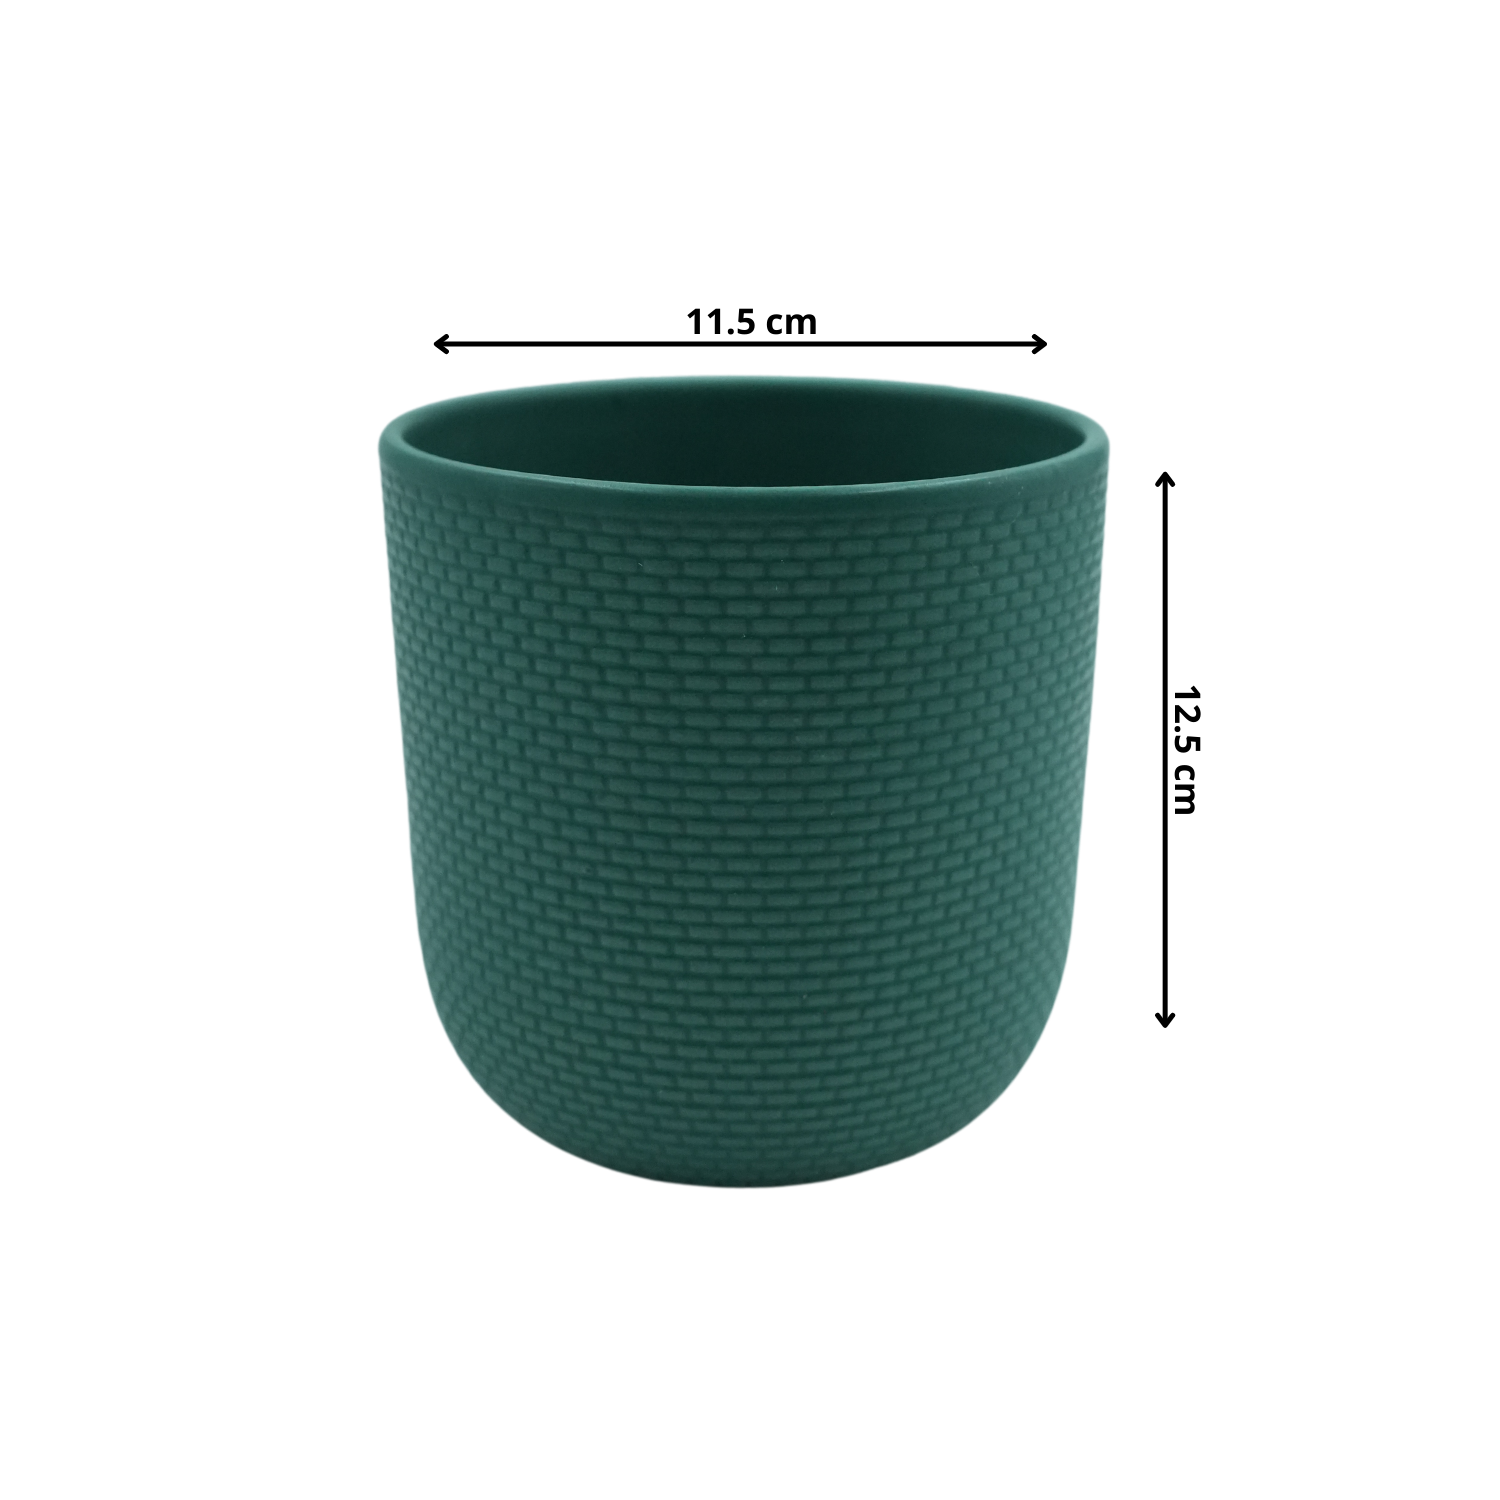 Designer Ceramic Pot (Green, Matt Finish,Small) for Home & Indoor Plant Decor